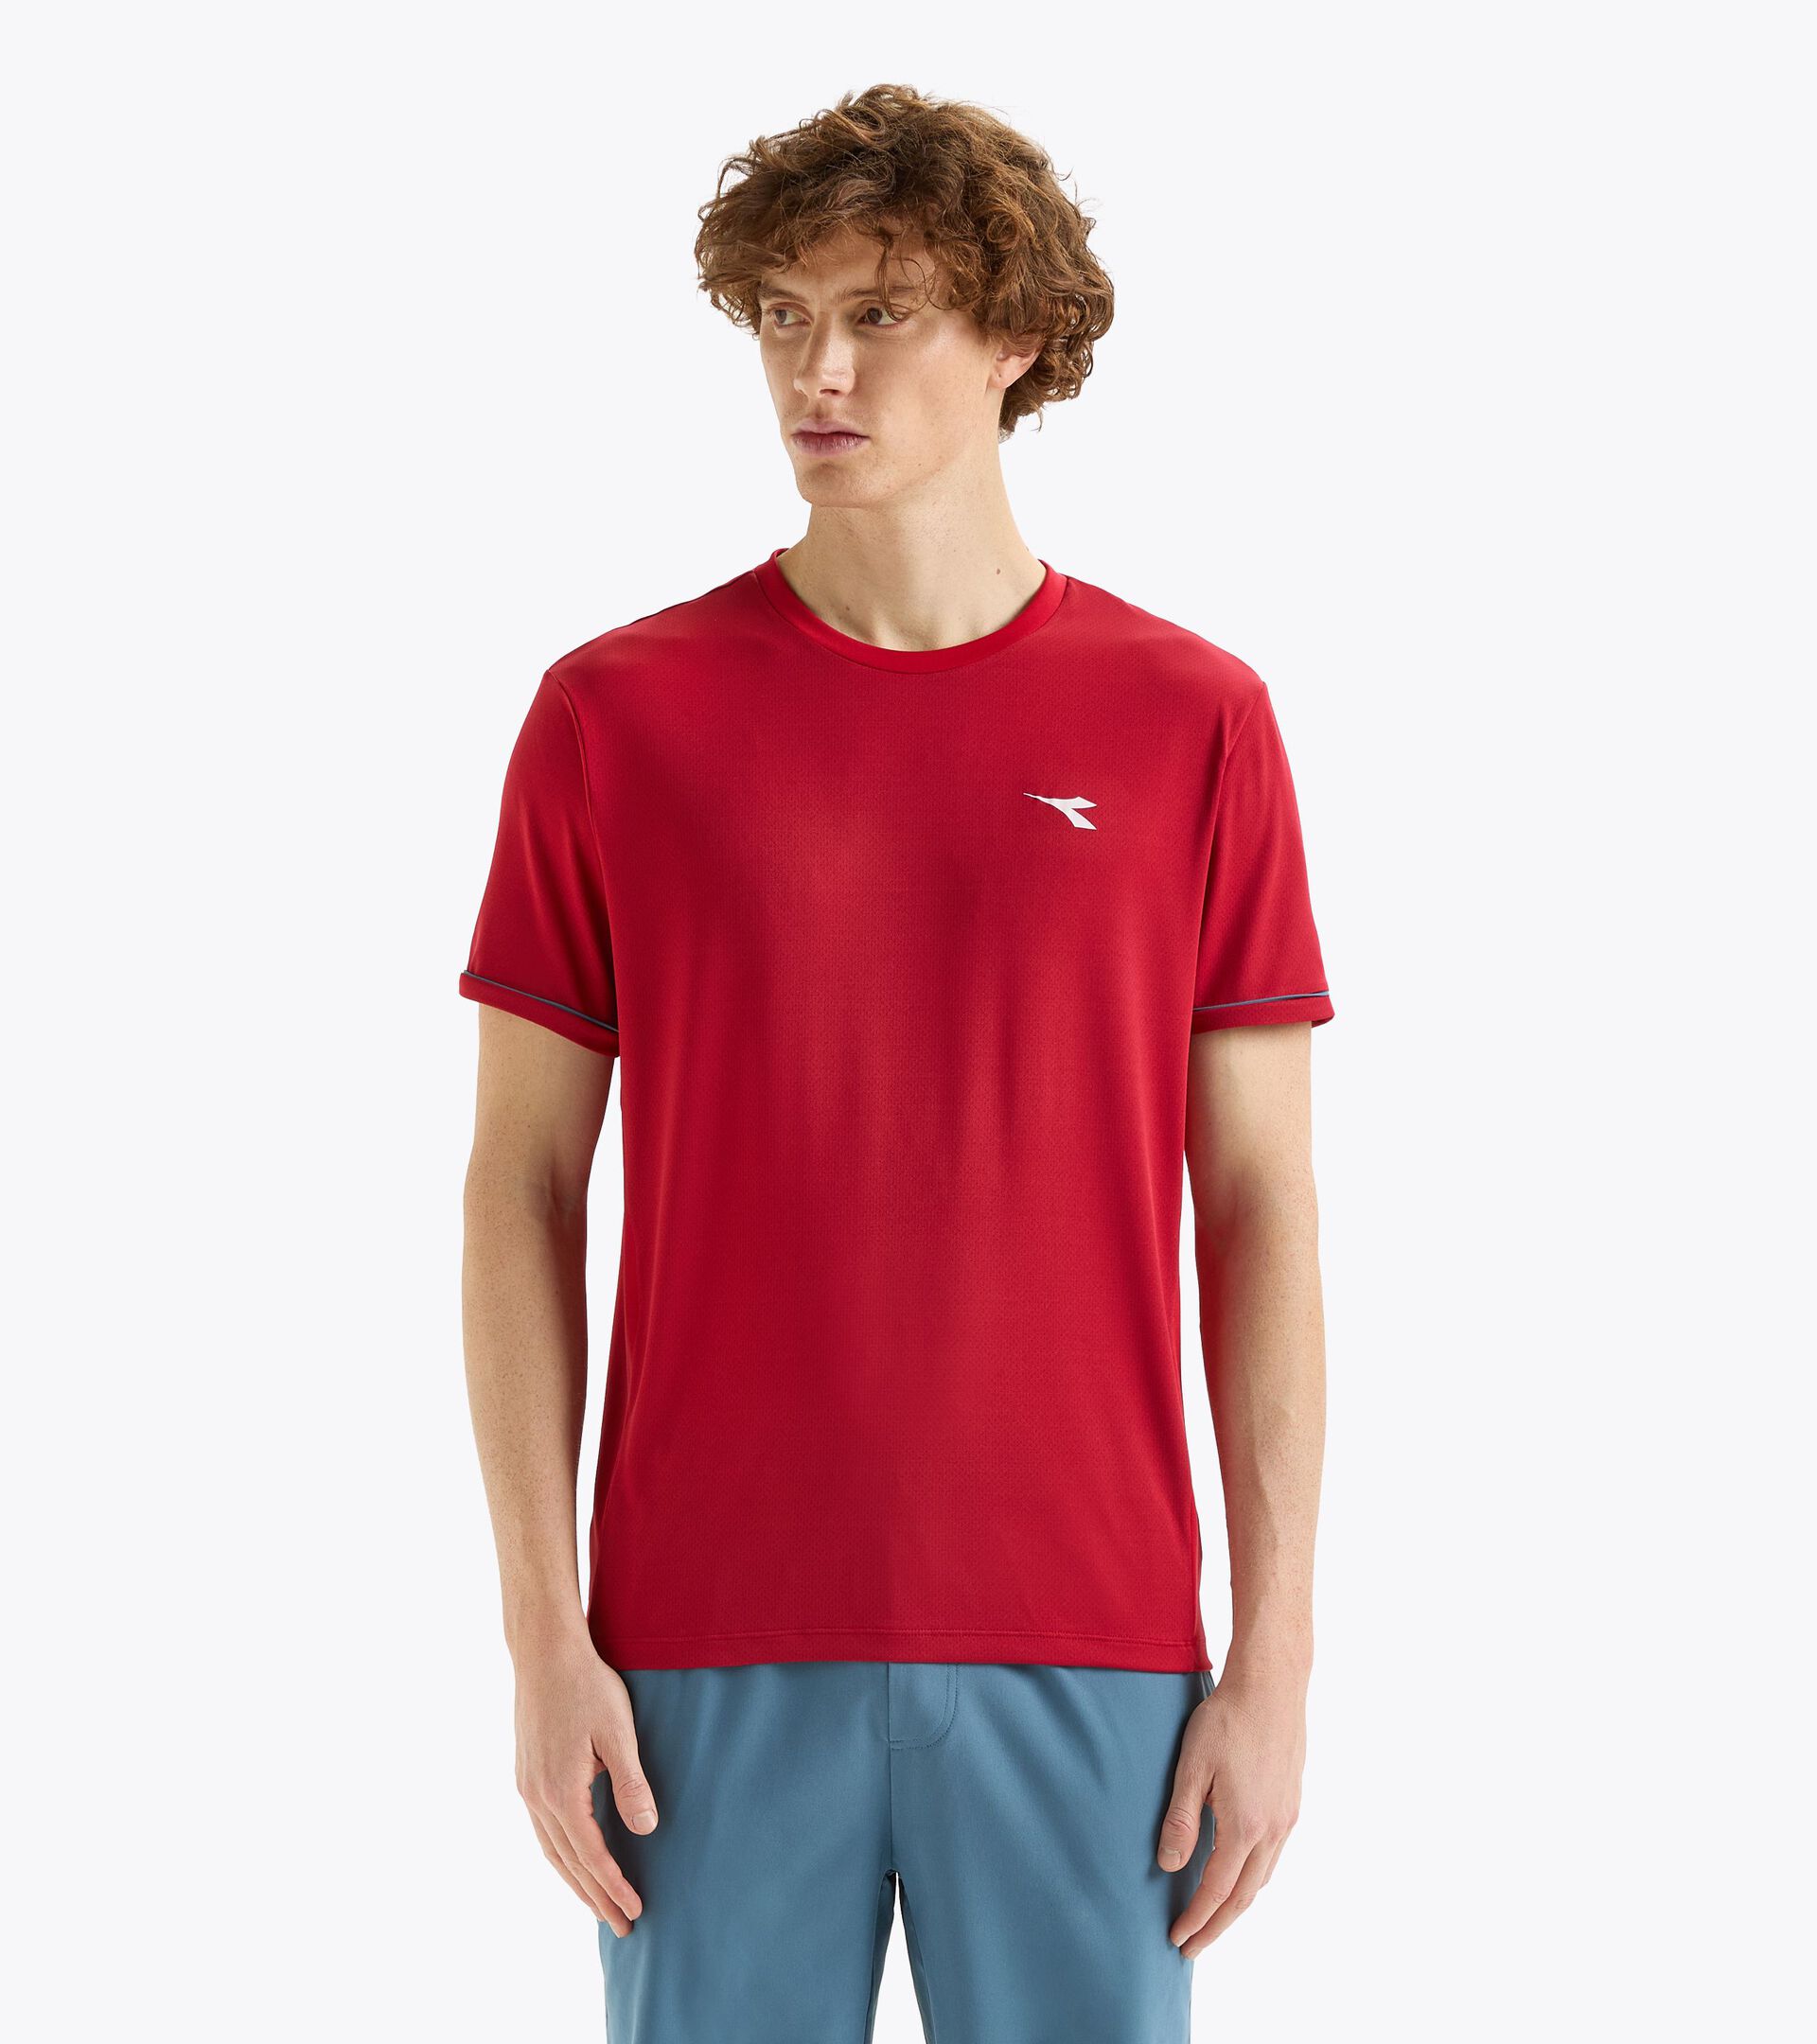 T-shirt de tennis - Homme SS T-SHIRT TENNIS ROUGE CHILI POIVRE - Diadora